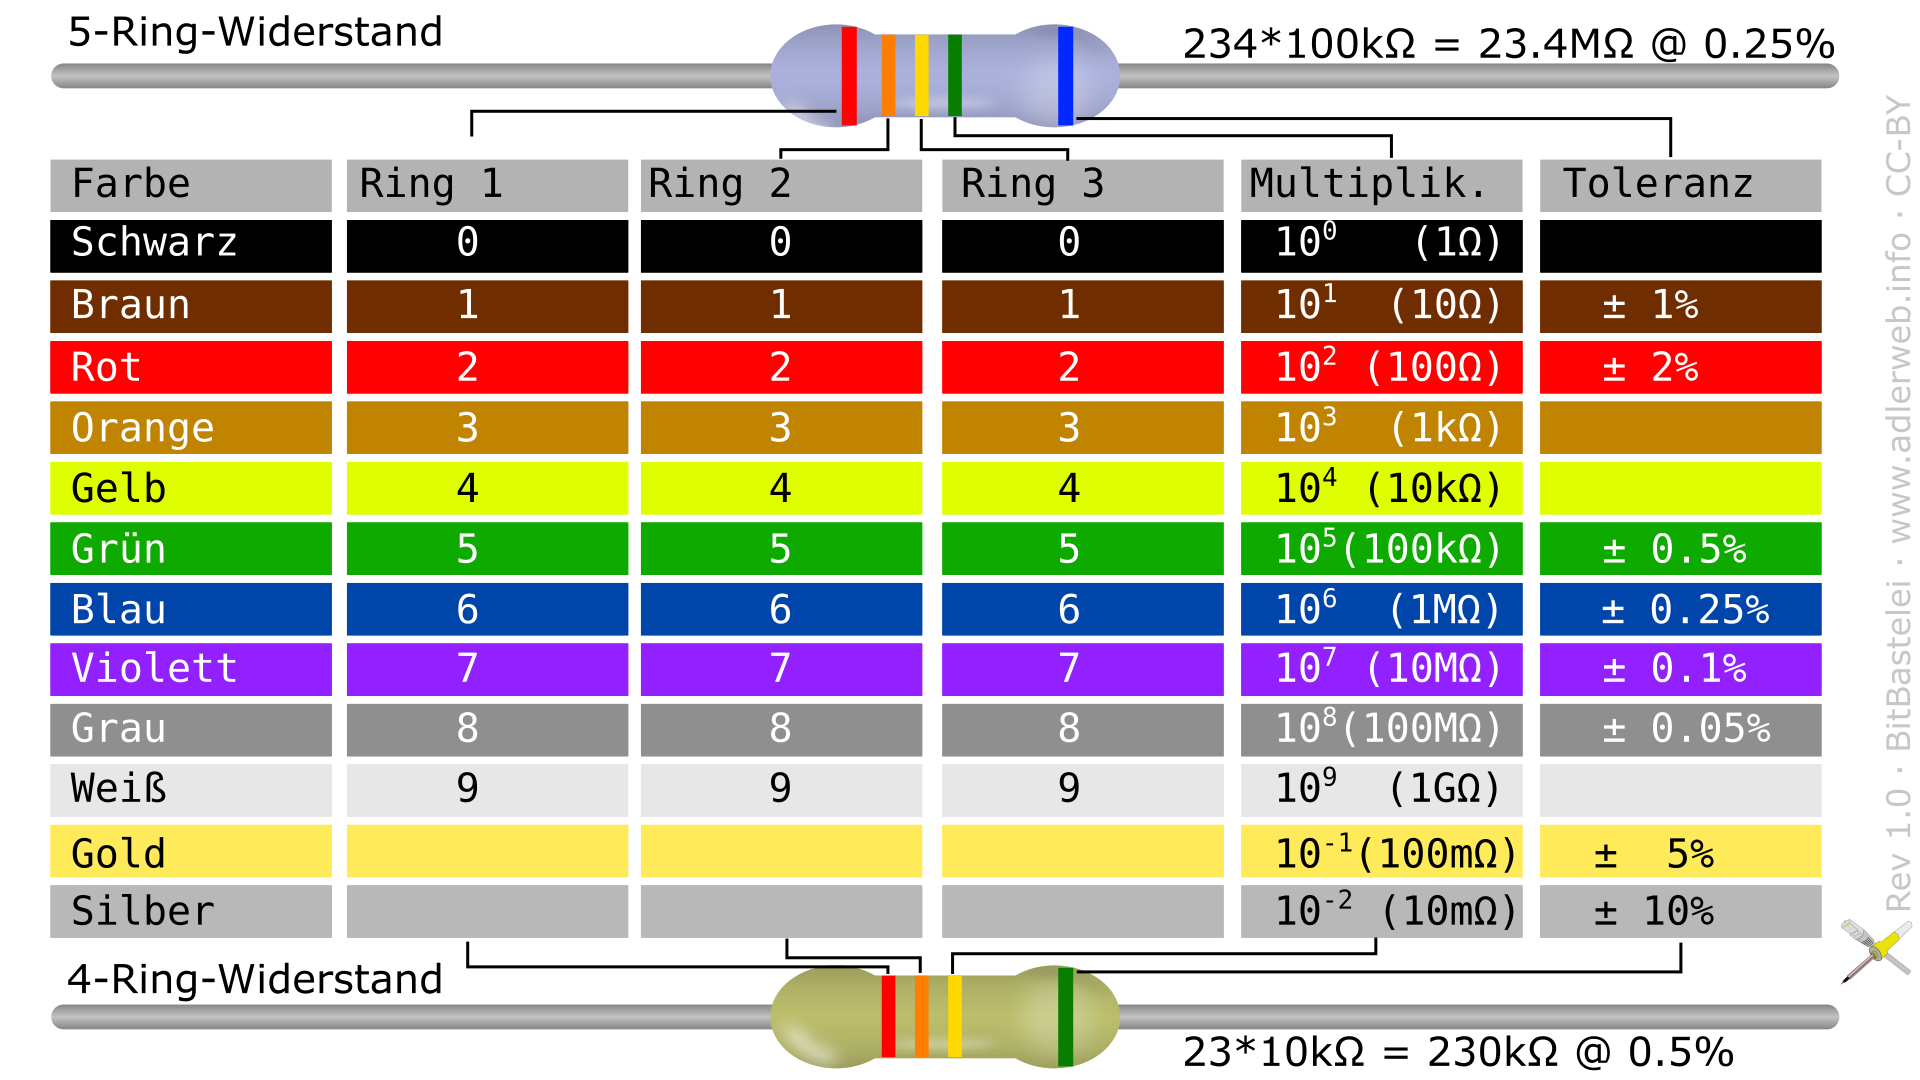 Декодер резисторов Декодер цветовой маркировки резисторов 3.4.5.6 полос. 100k резистор маркировка. Цветовая кодировка резисторов таблица. Цветовая маркировка резисторов e24.